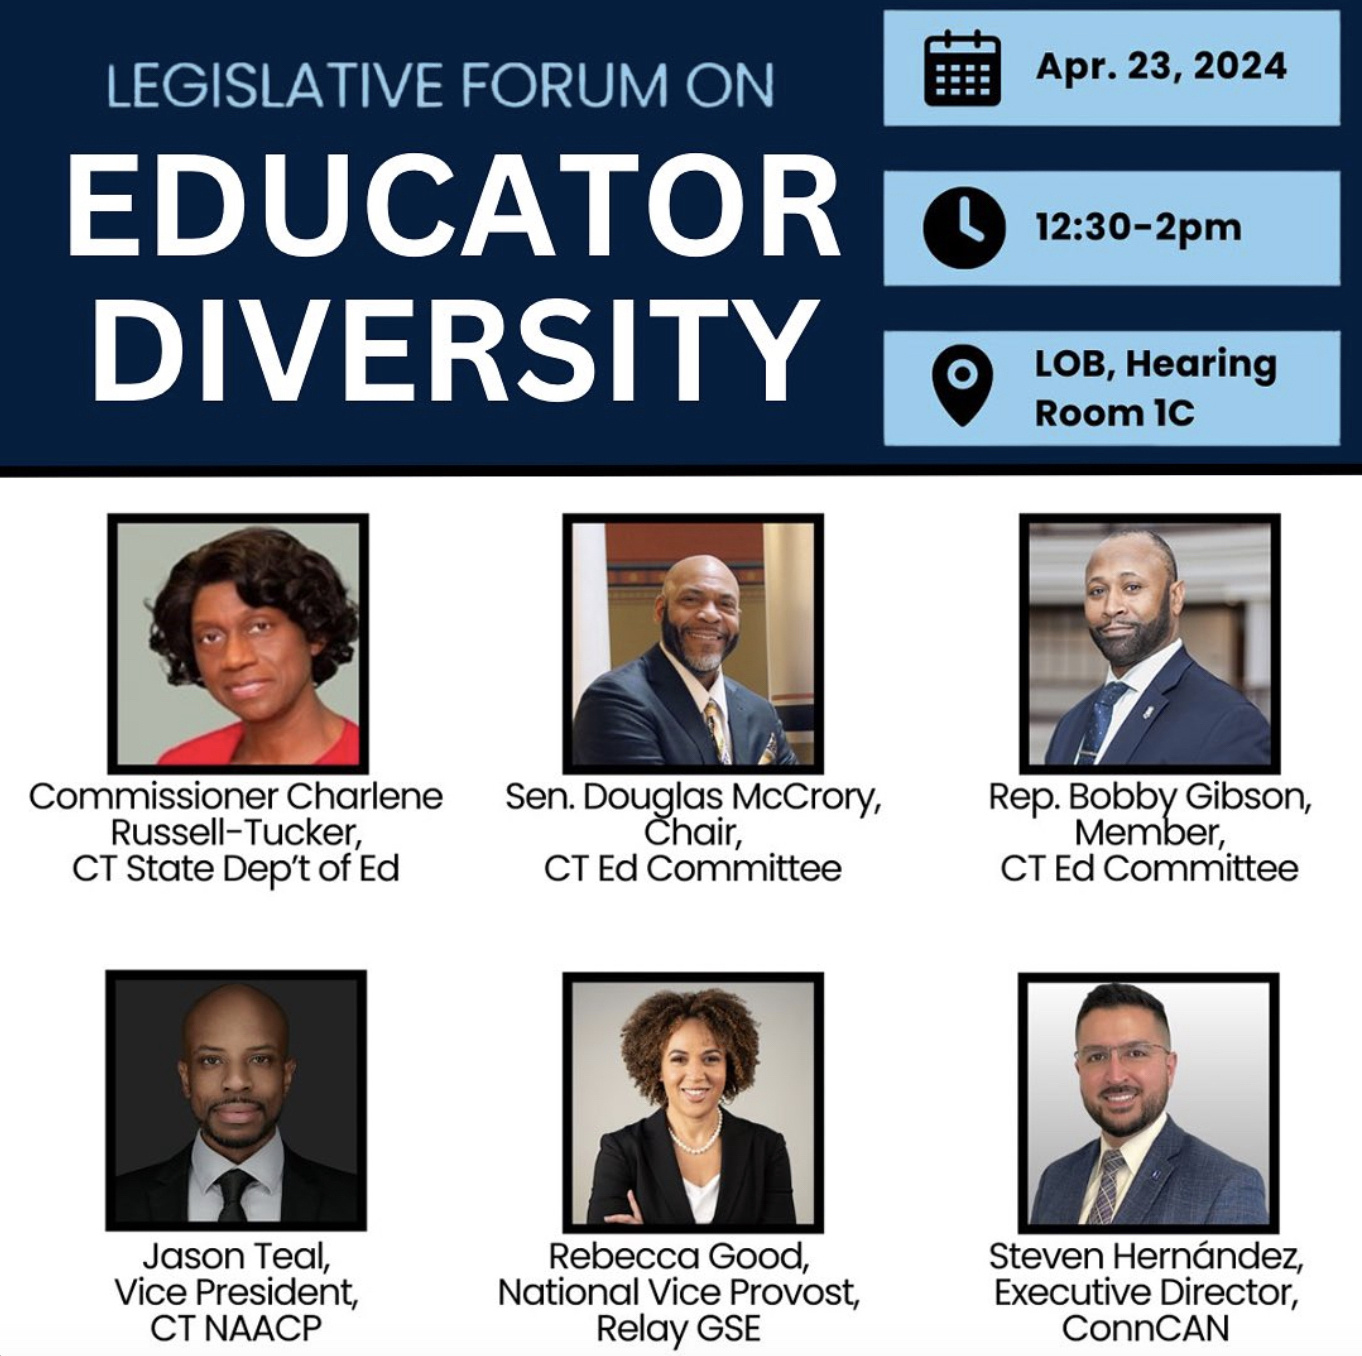 Details on a legislative forum on educator diversity being held.